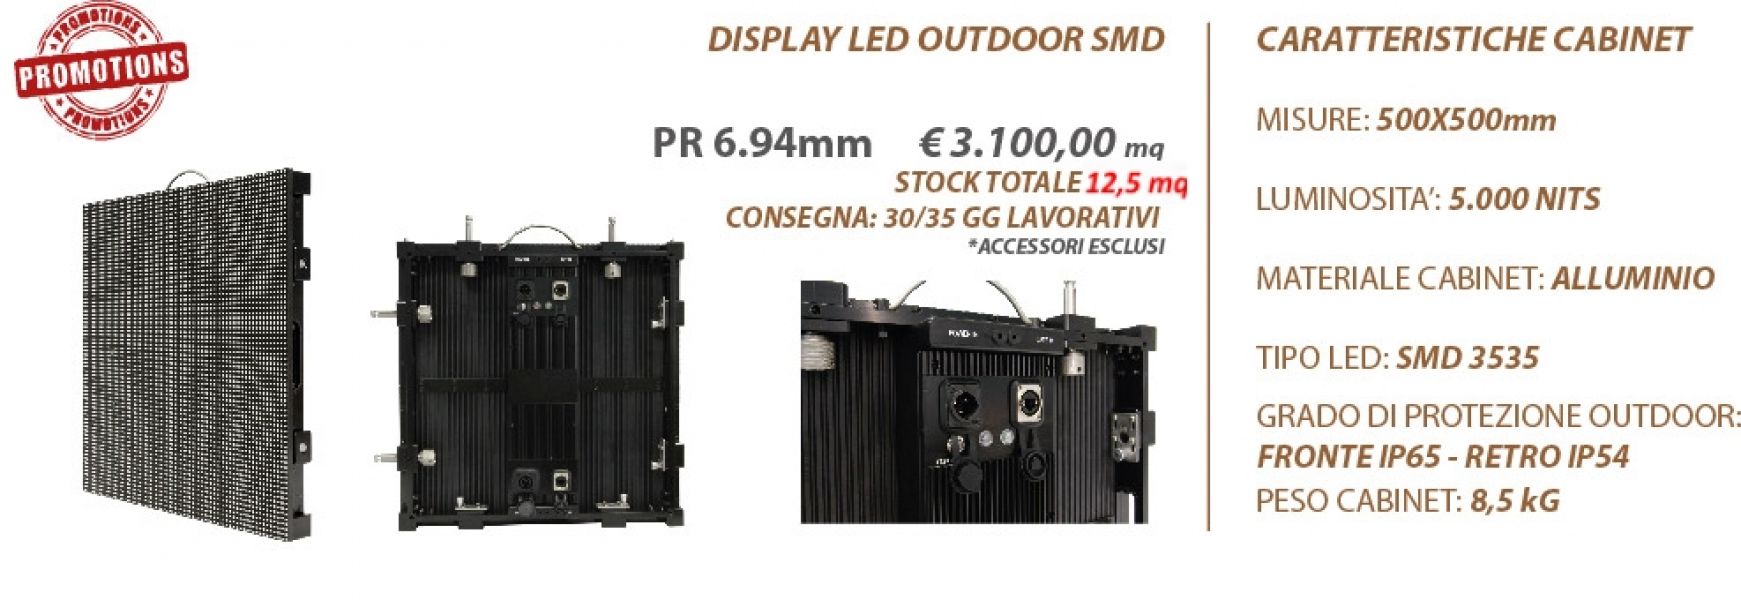 Maxi schermi / Display a led 